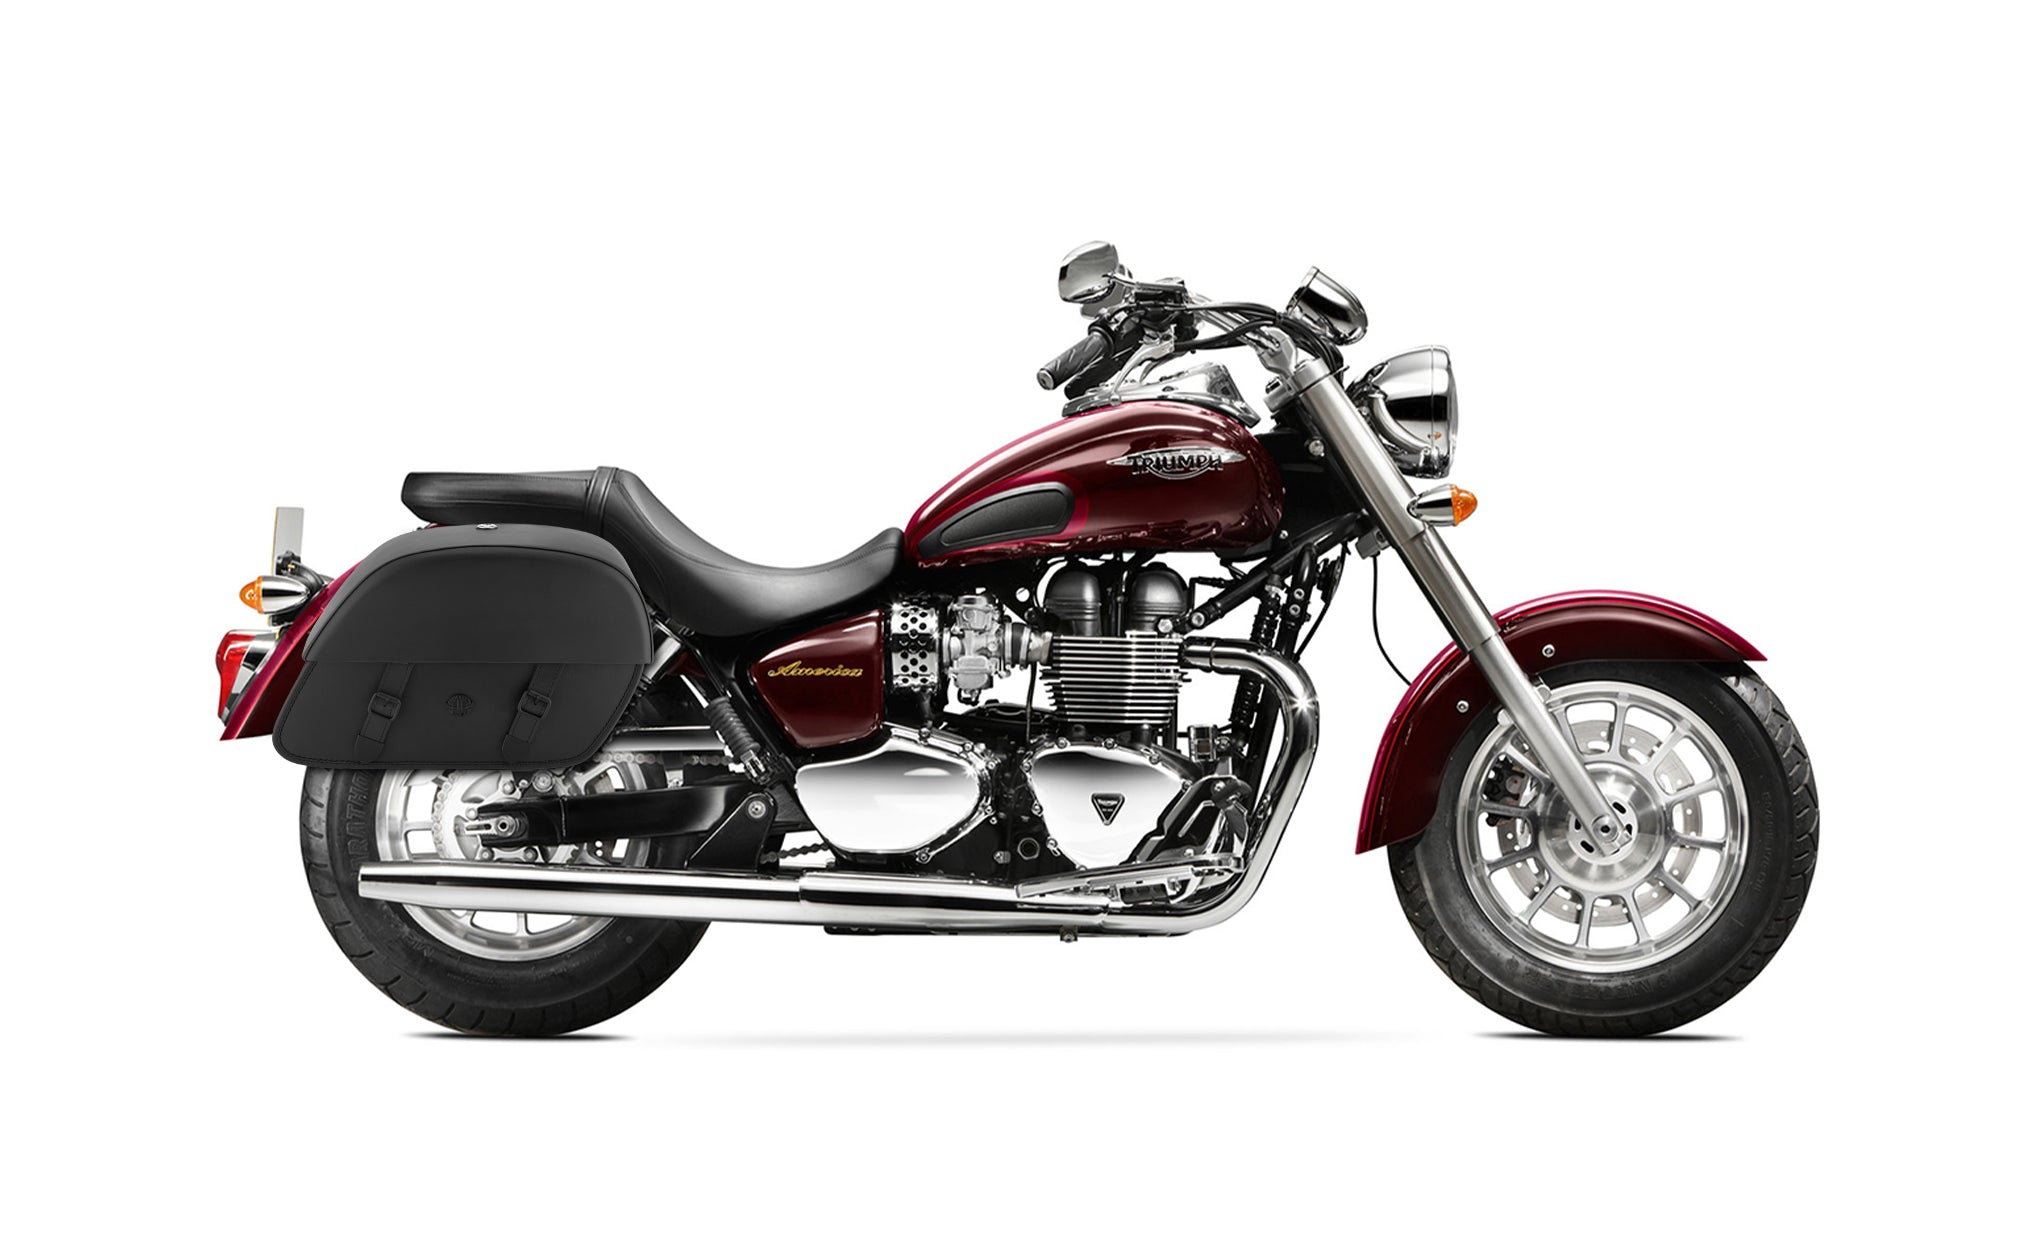 28L - Baelor Medium Triumph America Motorcycle Saddlebags @expand